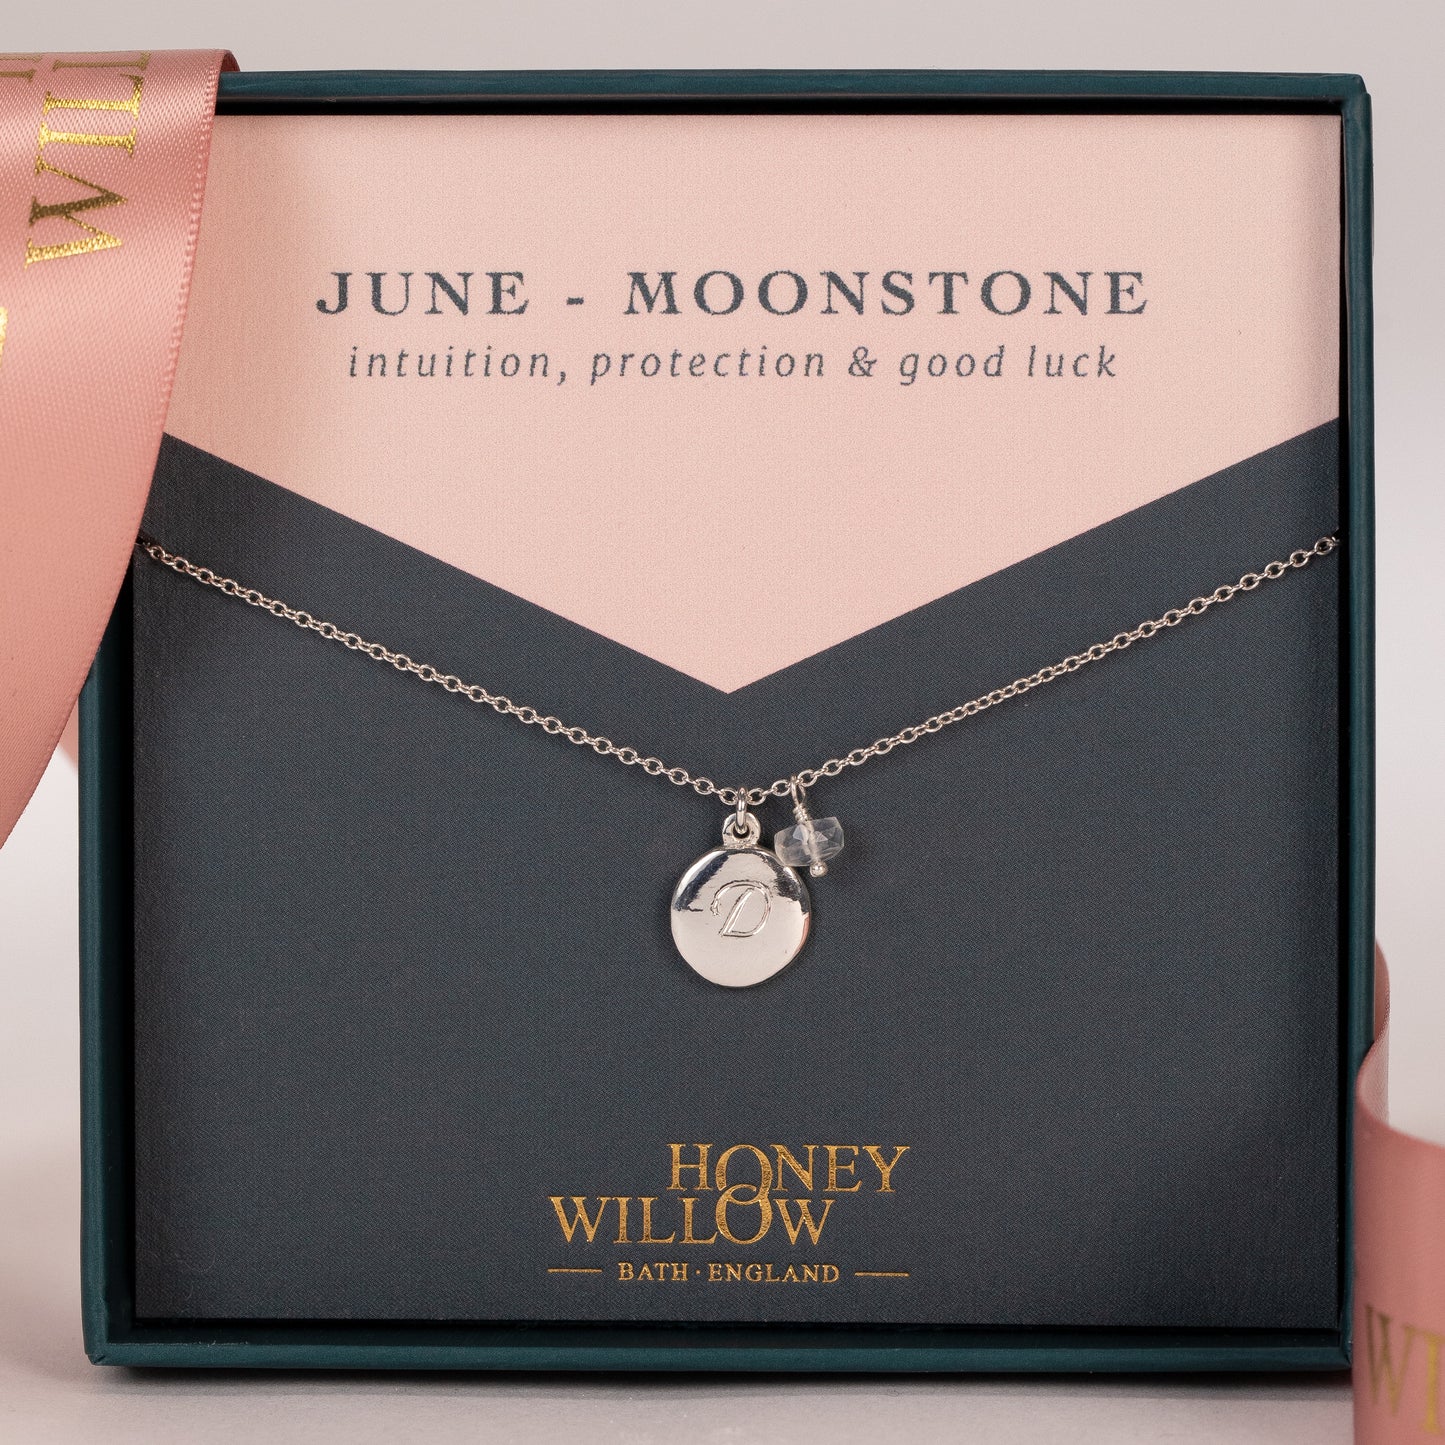 June birthstone necklace